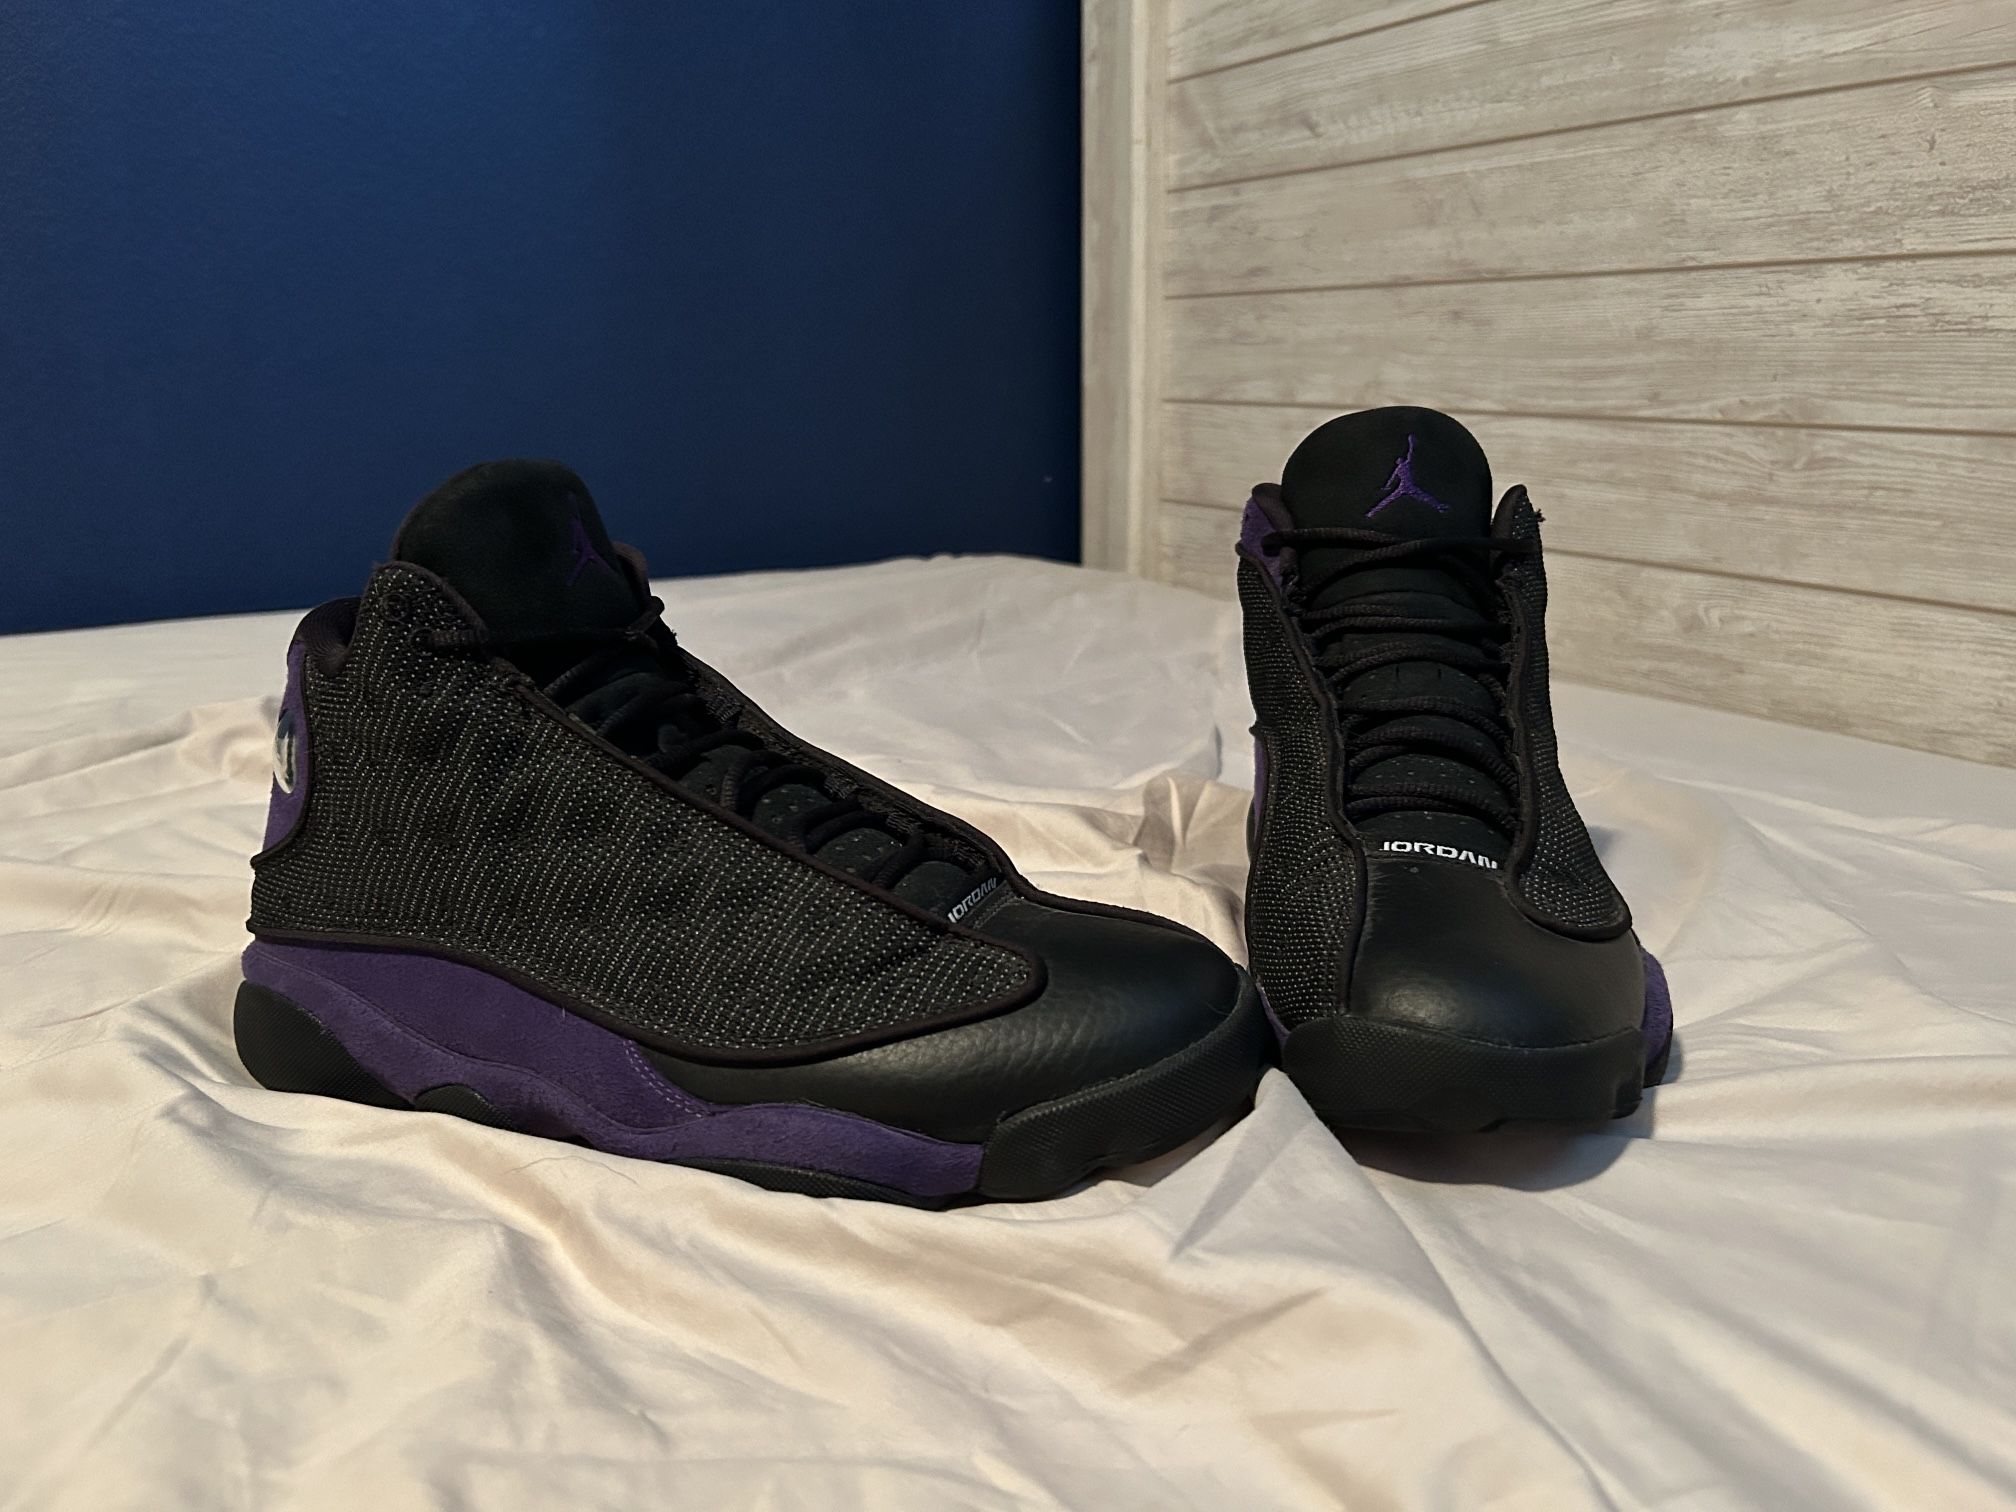 Jordan 13s Court Purple, Size 10